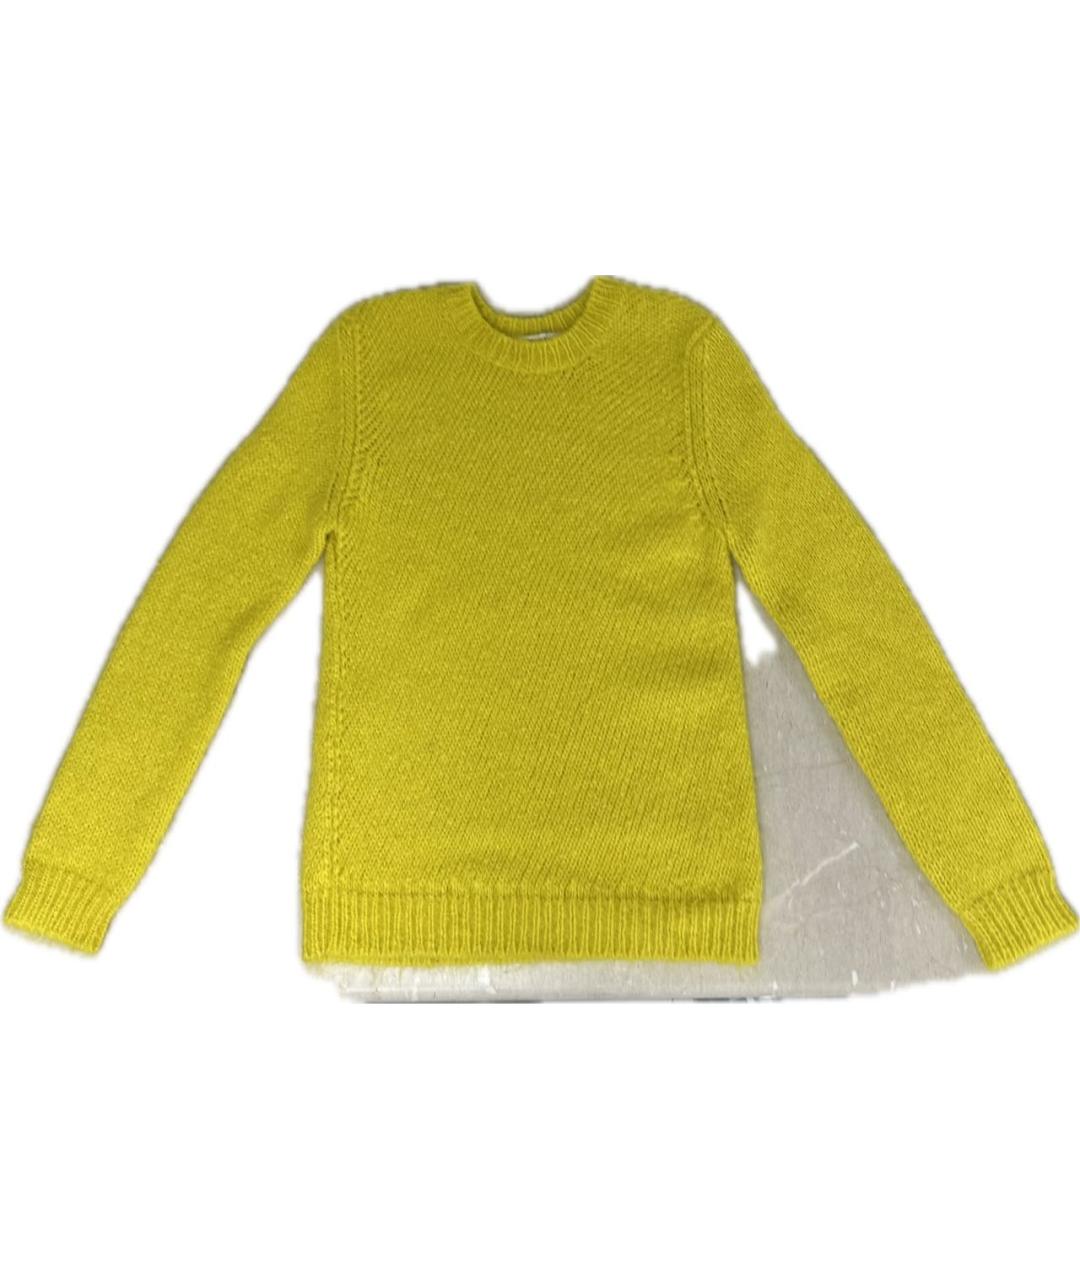 CELINE PRE-OWNED Желтый джемпер / свитер, фото 1